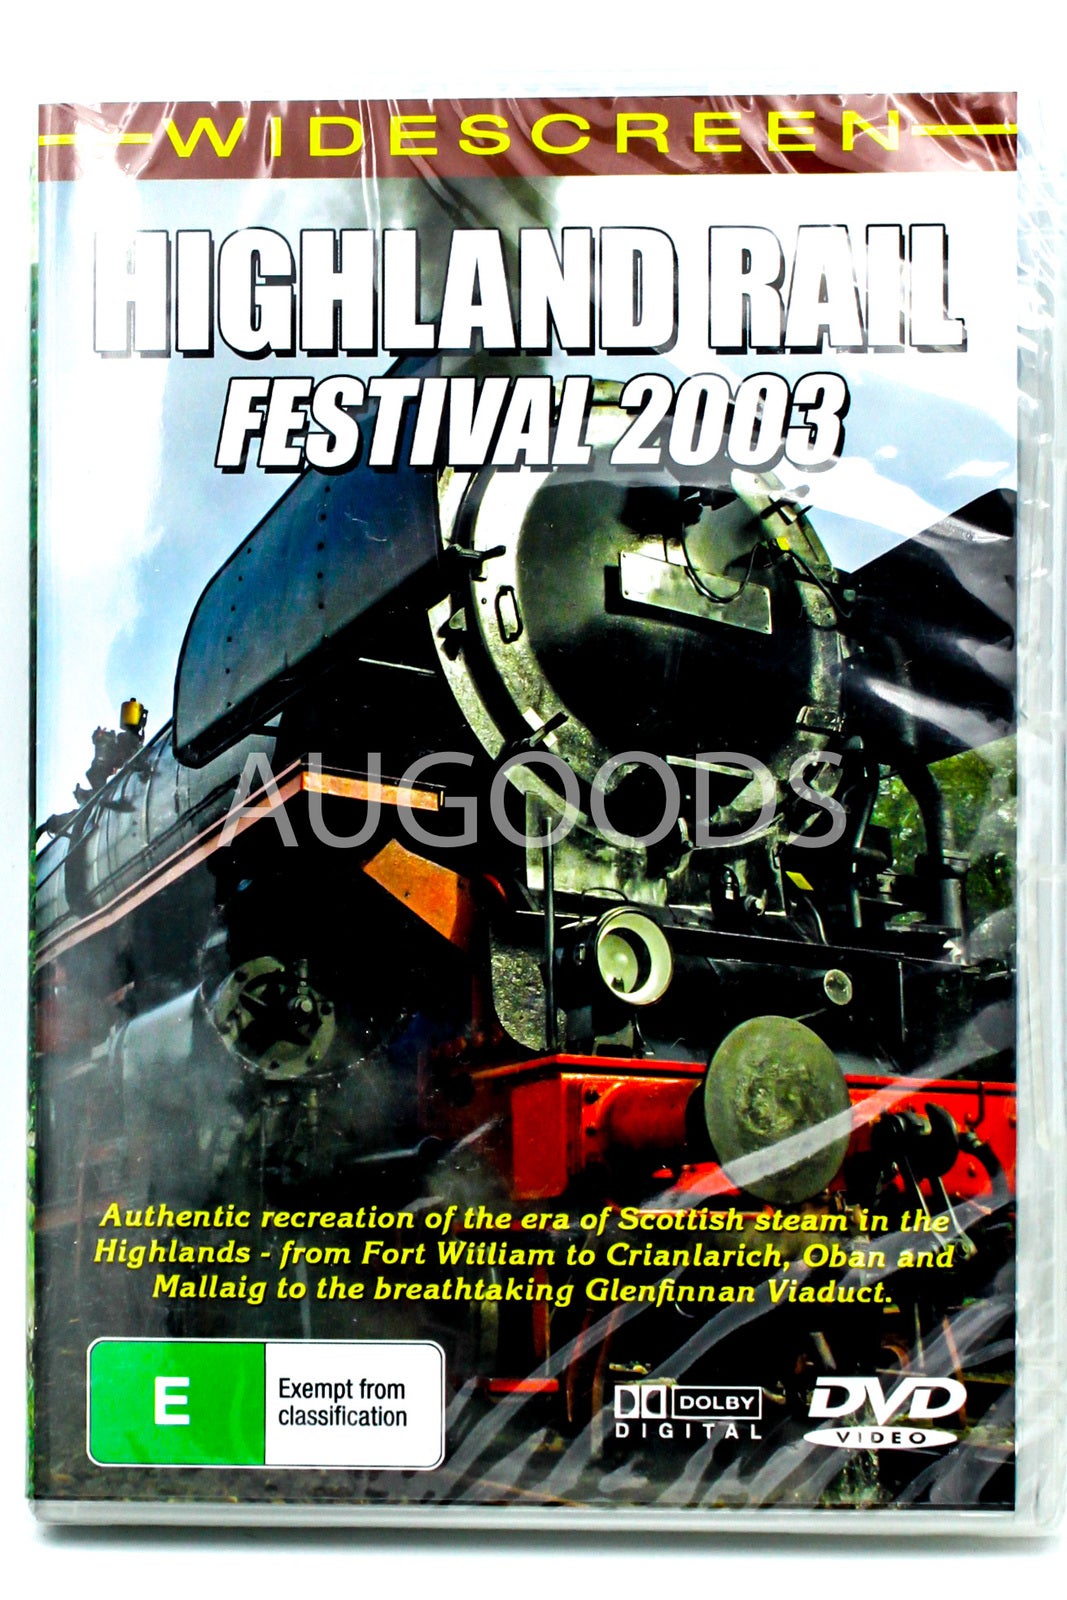 Highland Rail Festival 2003 DVD